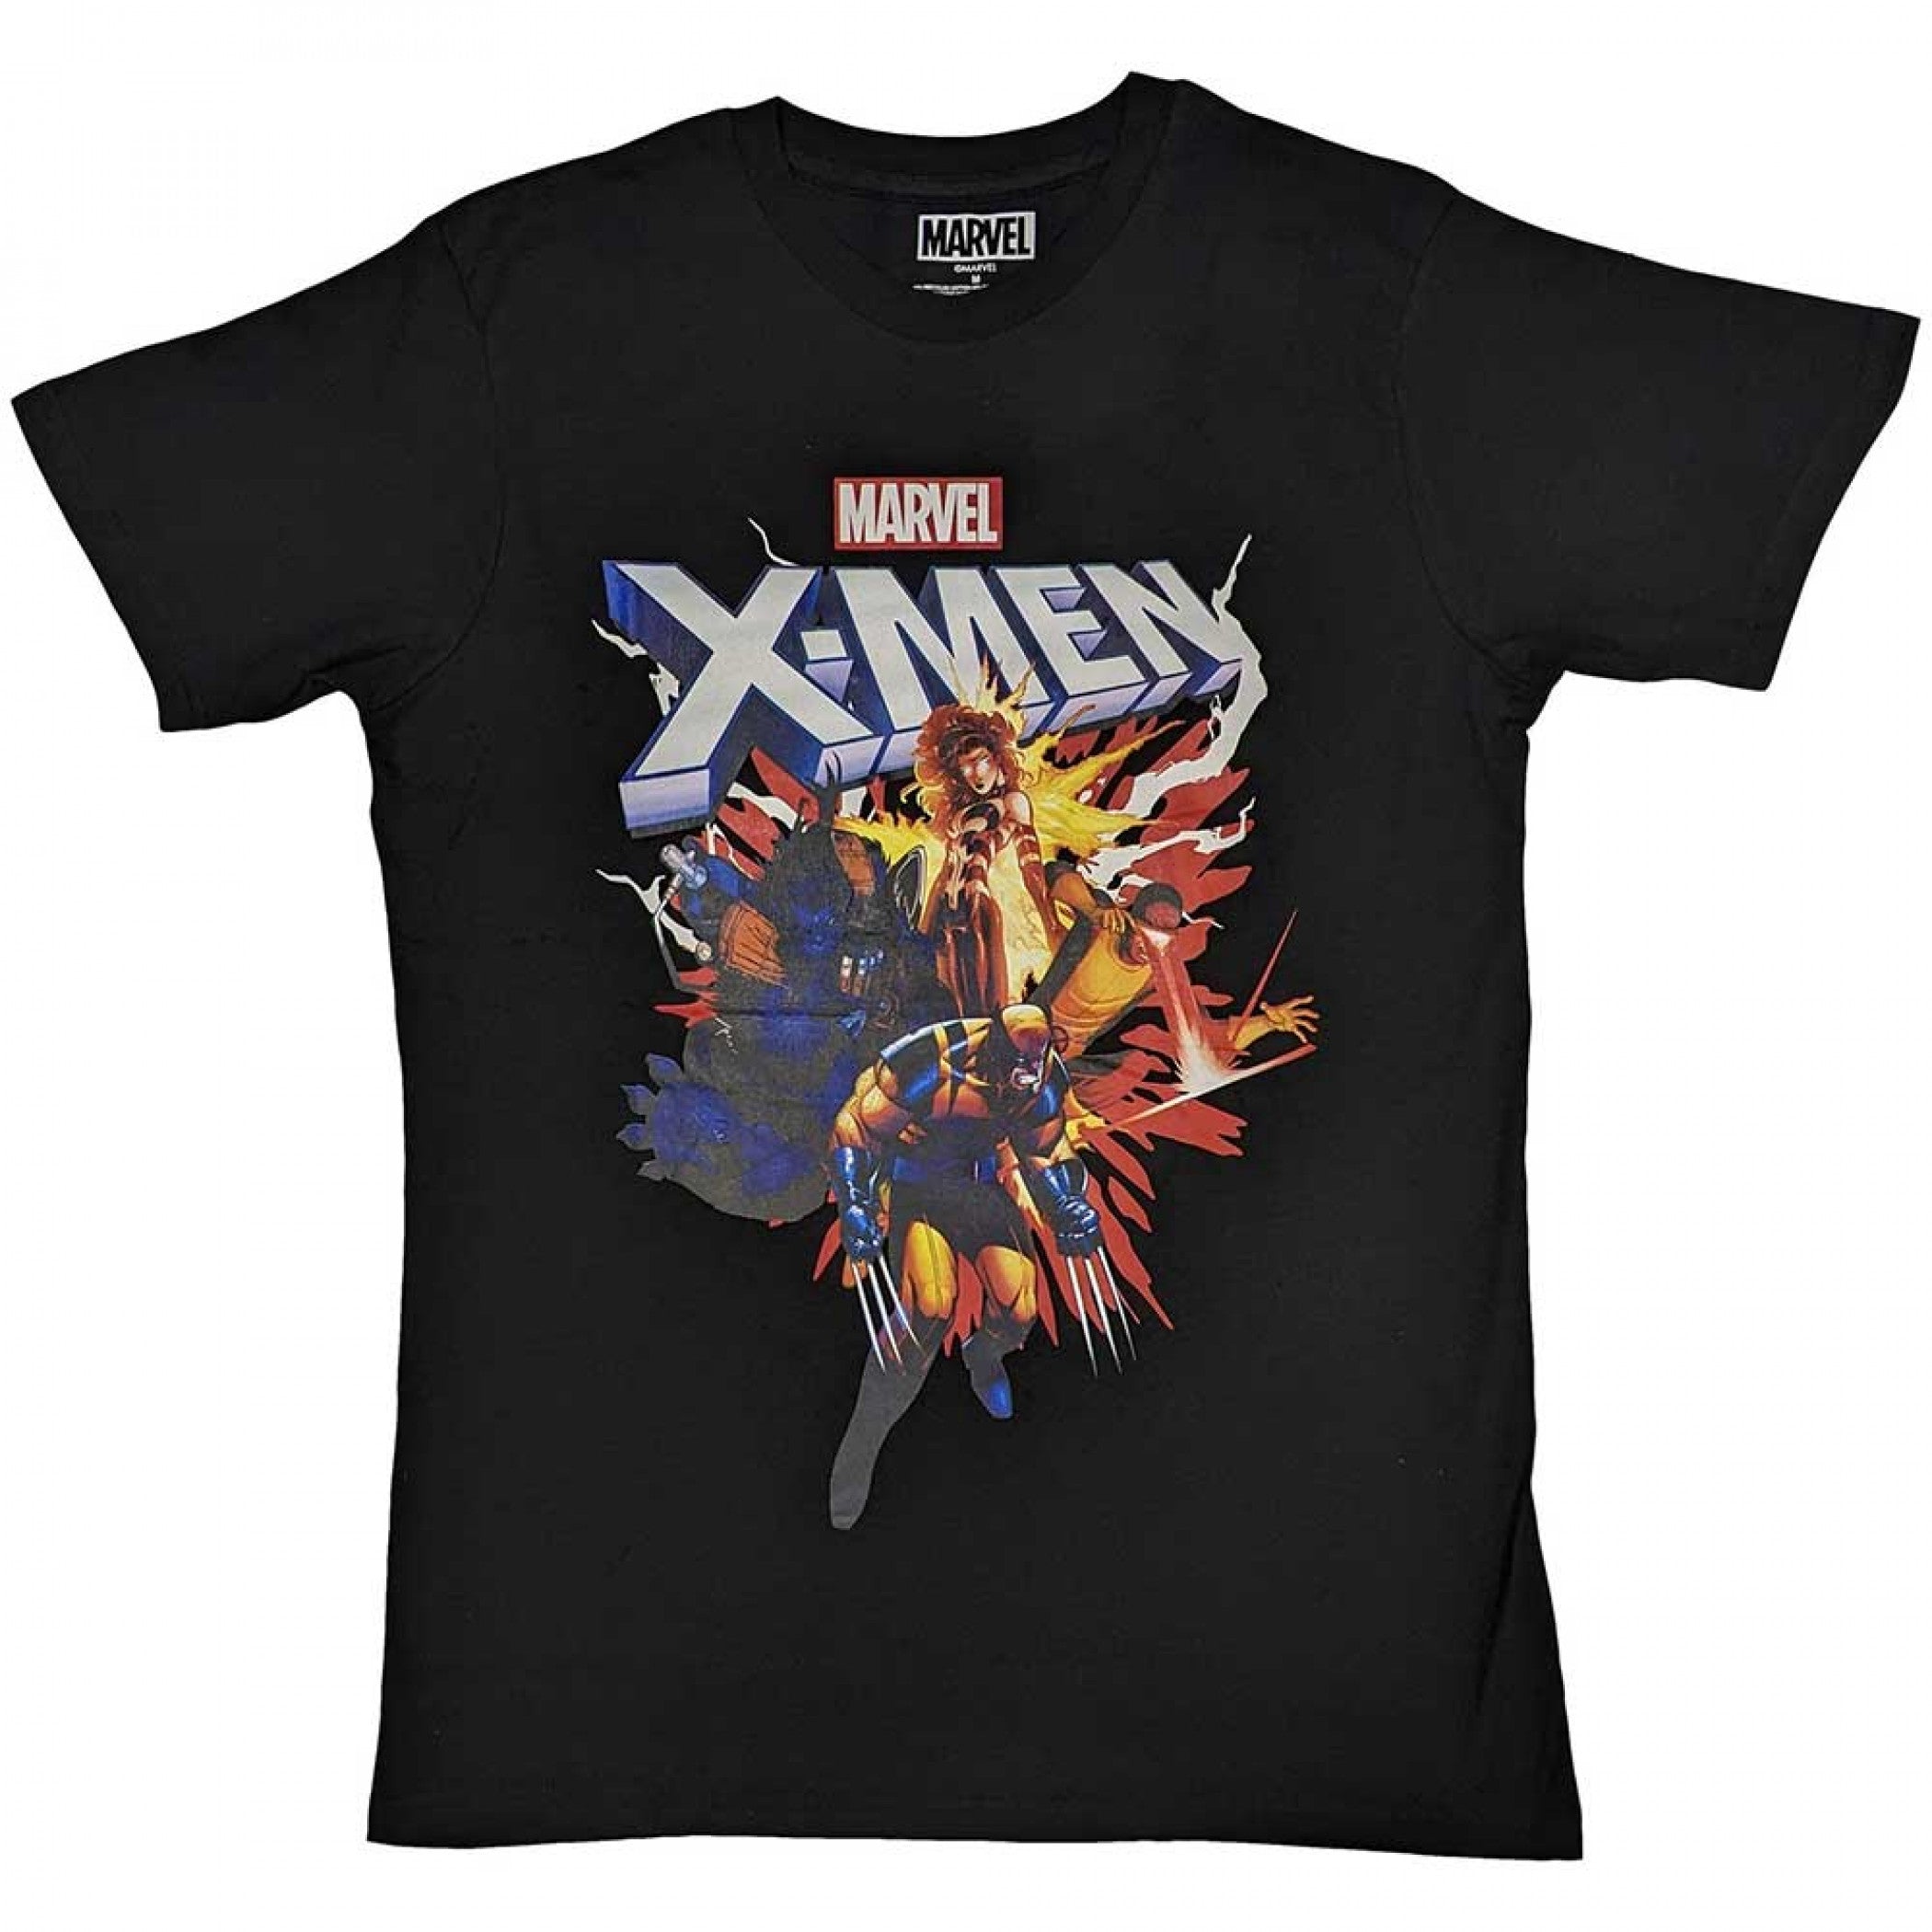 X-Men Super Explosion T-Shirt